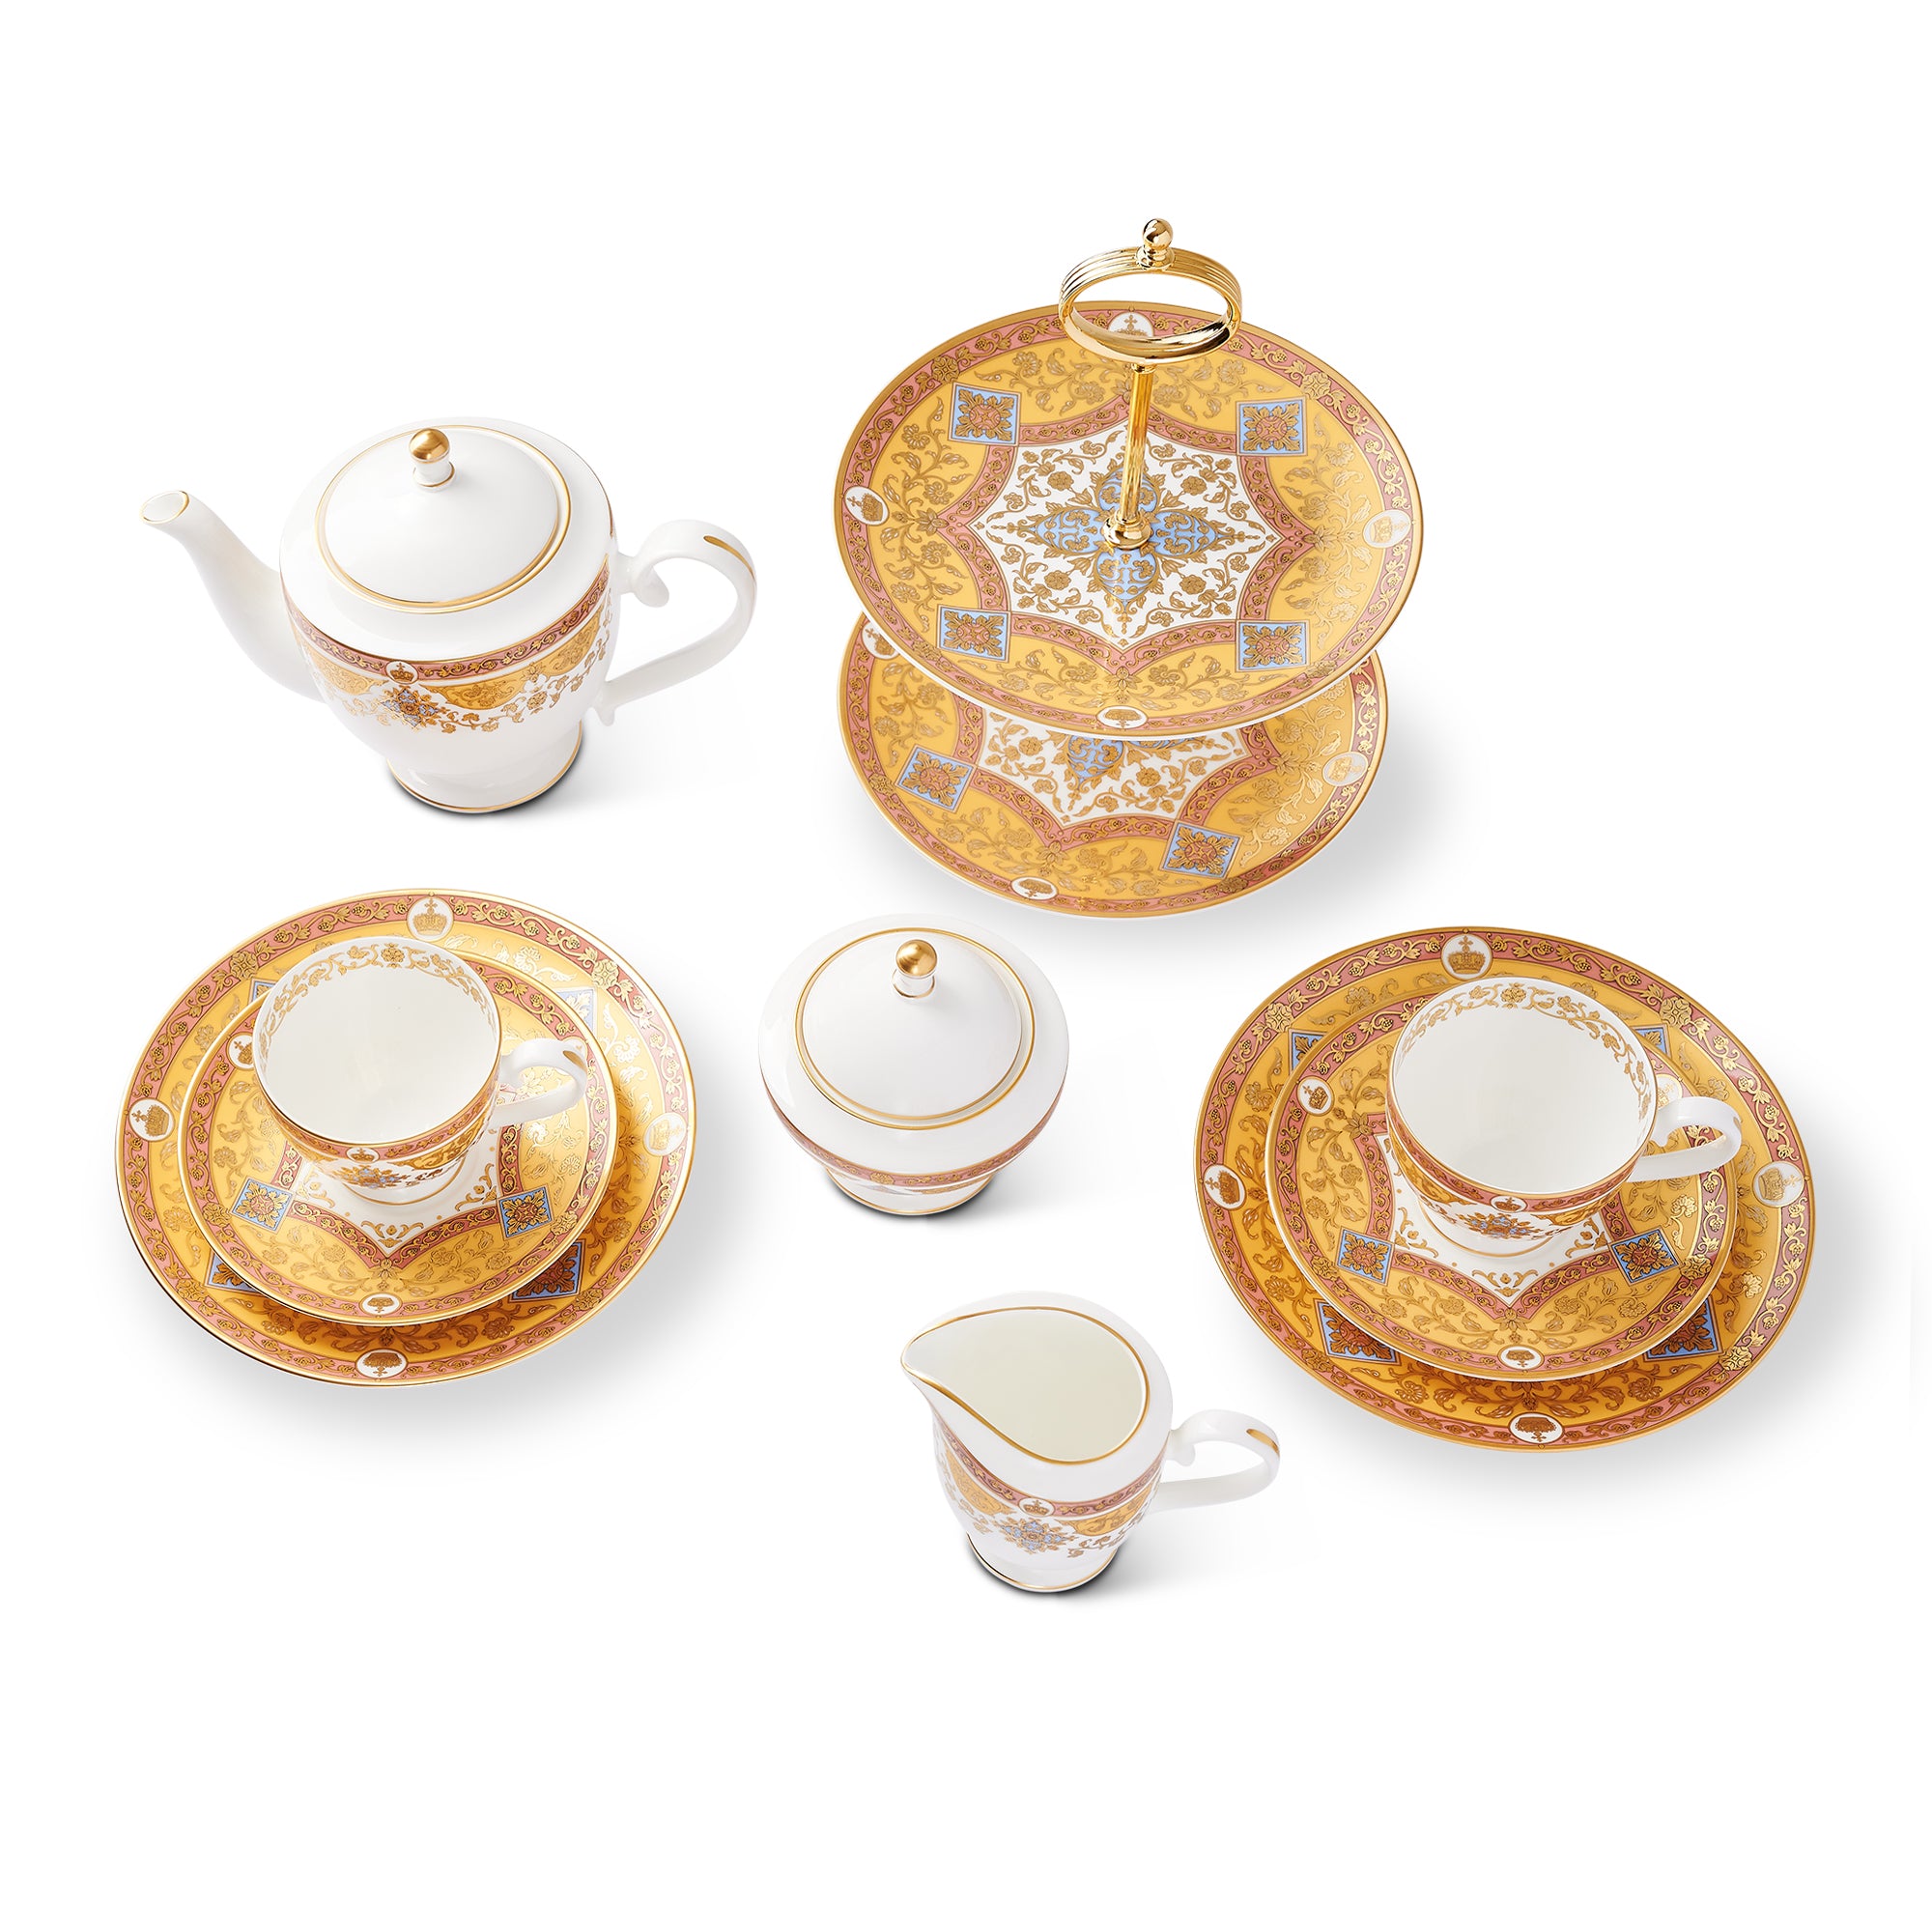 Tea Accessories & Coffee - Fairmont Store US